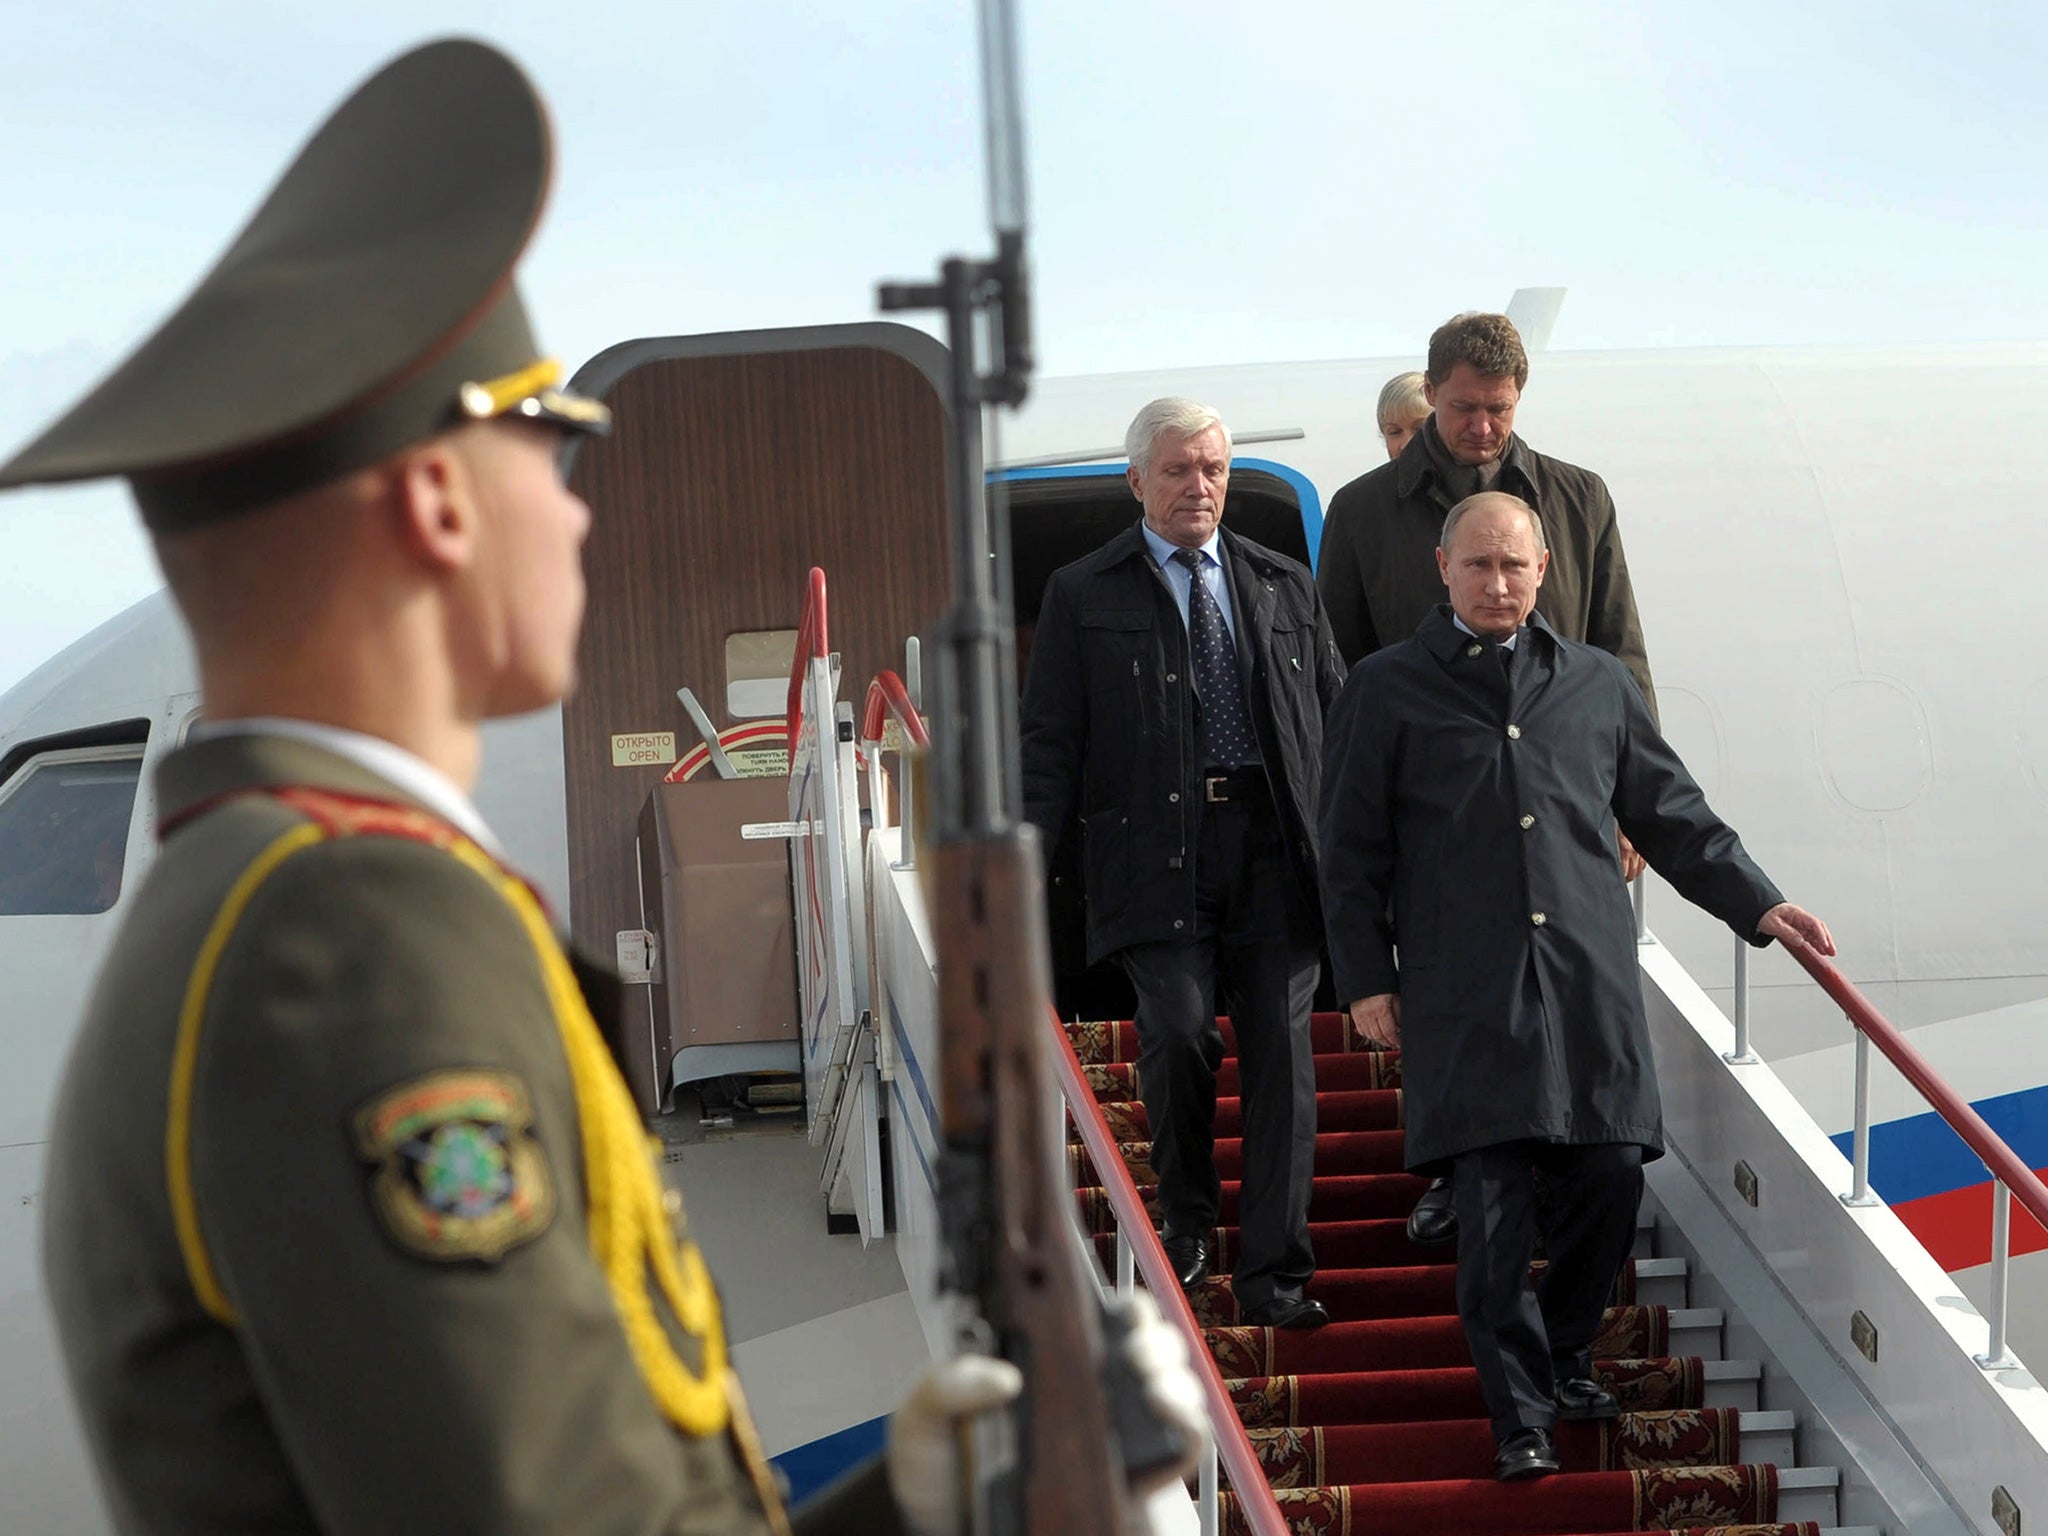 Russia's President Vladimir Putin arrives at Grodno airport